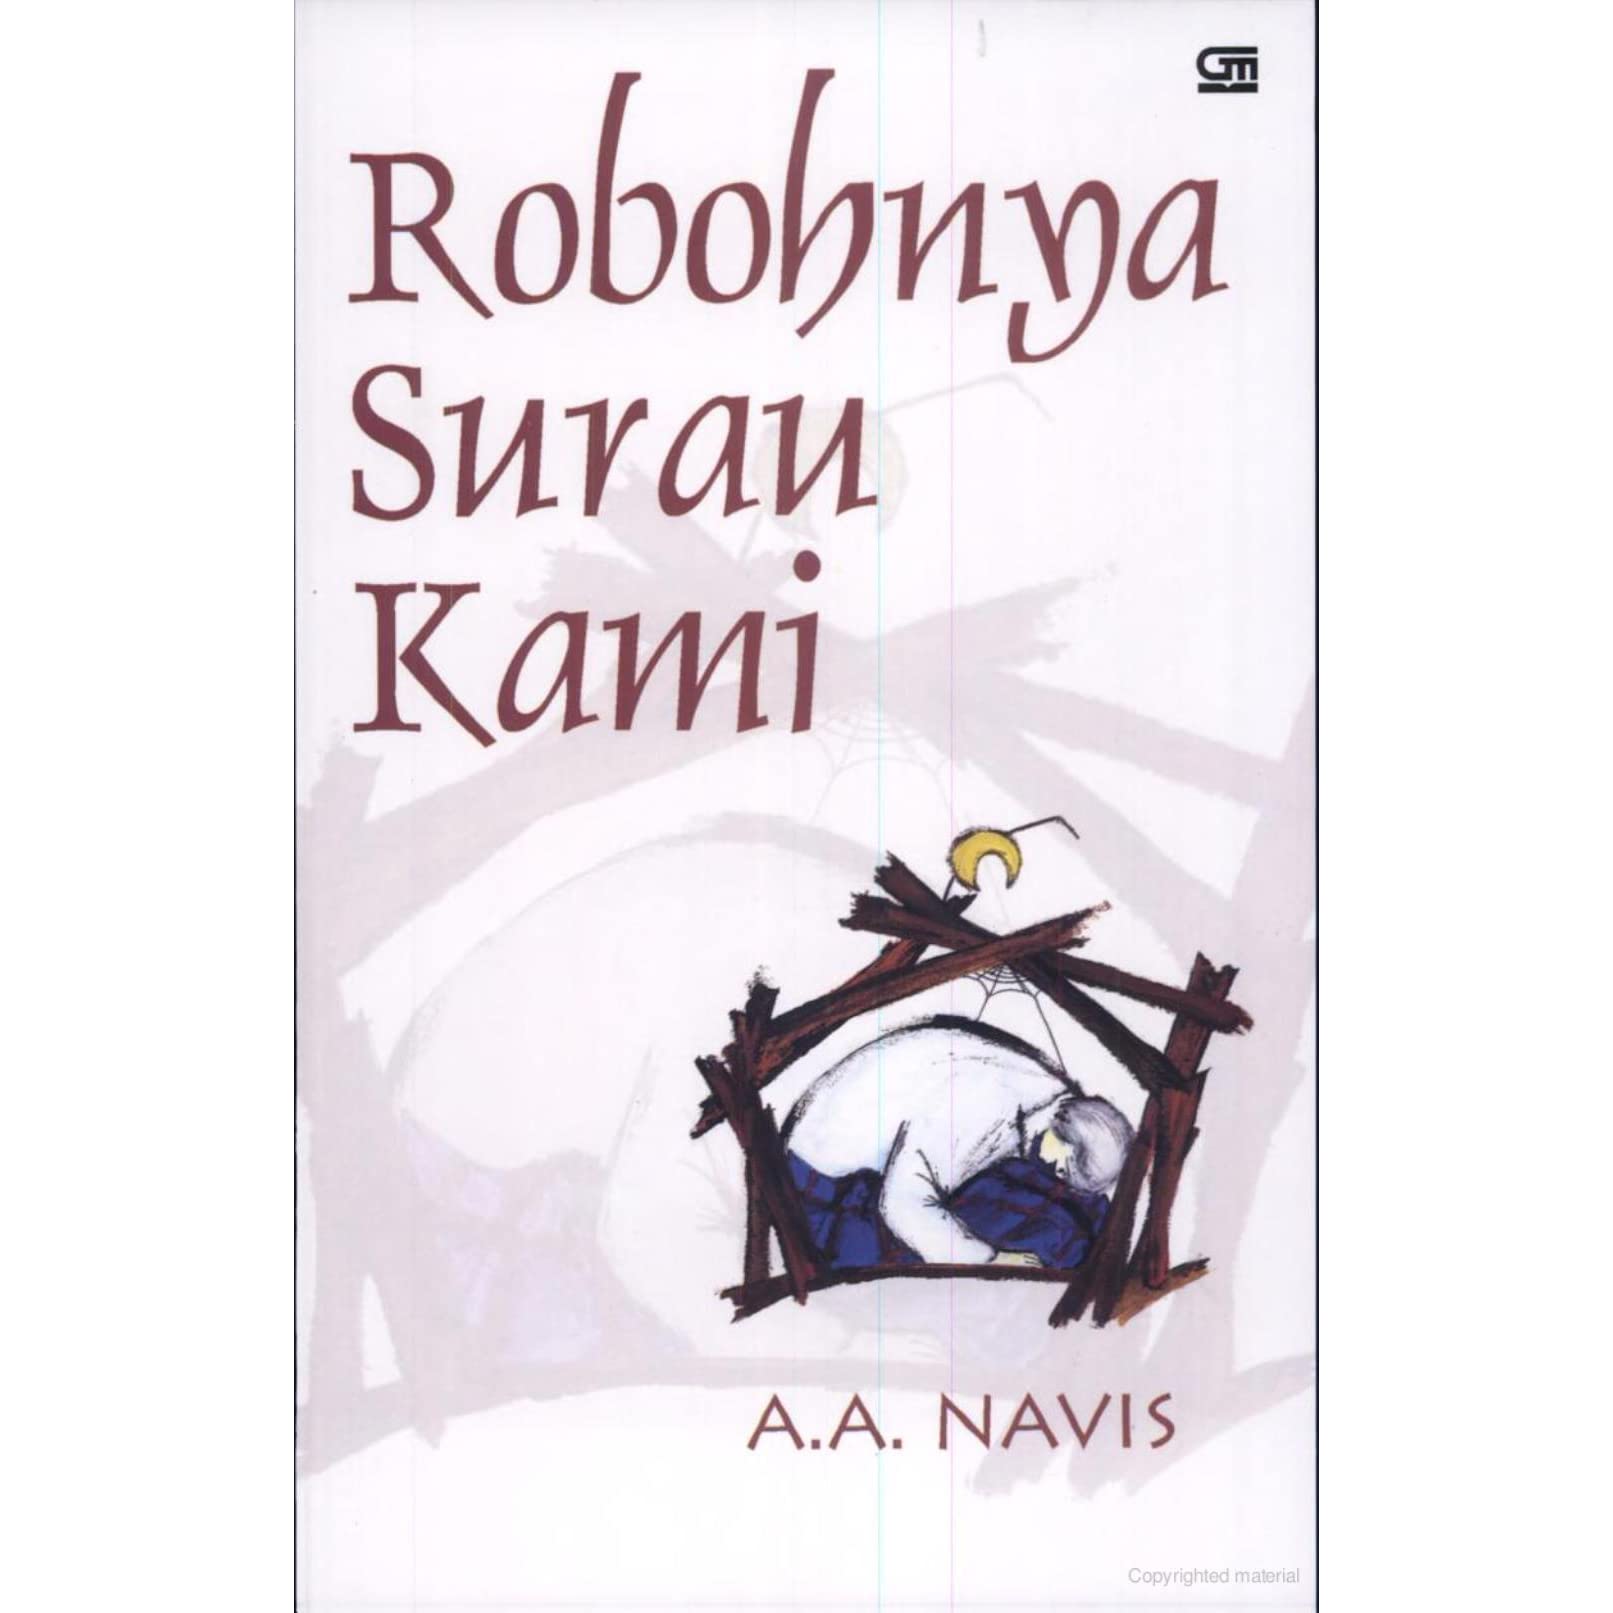 Gambar Novel Robohnya Surau Kami - KibrisPDR